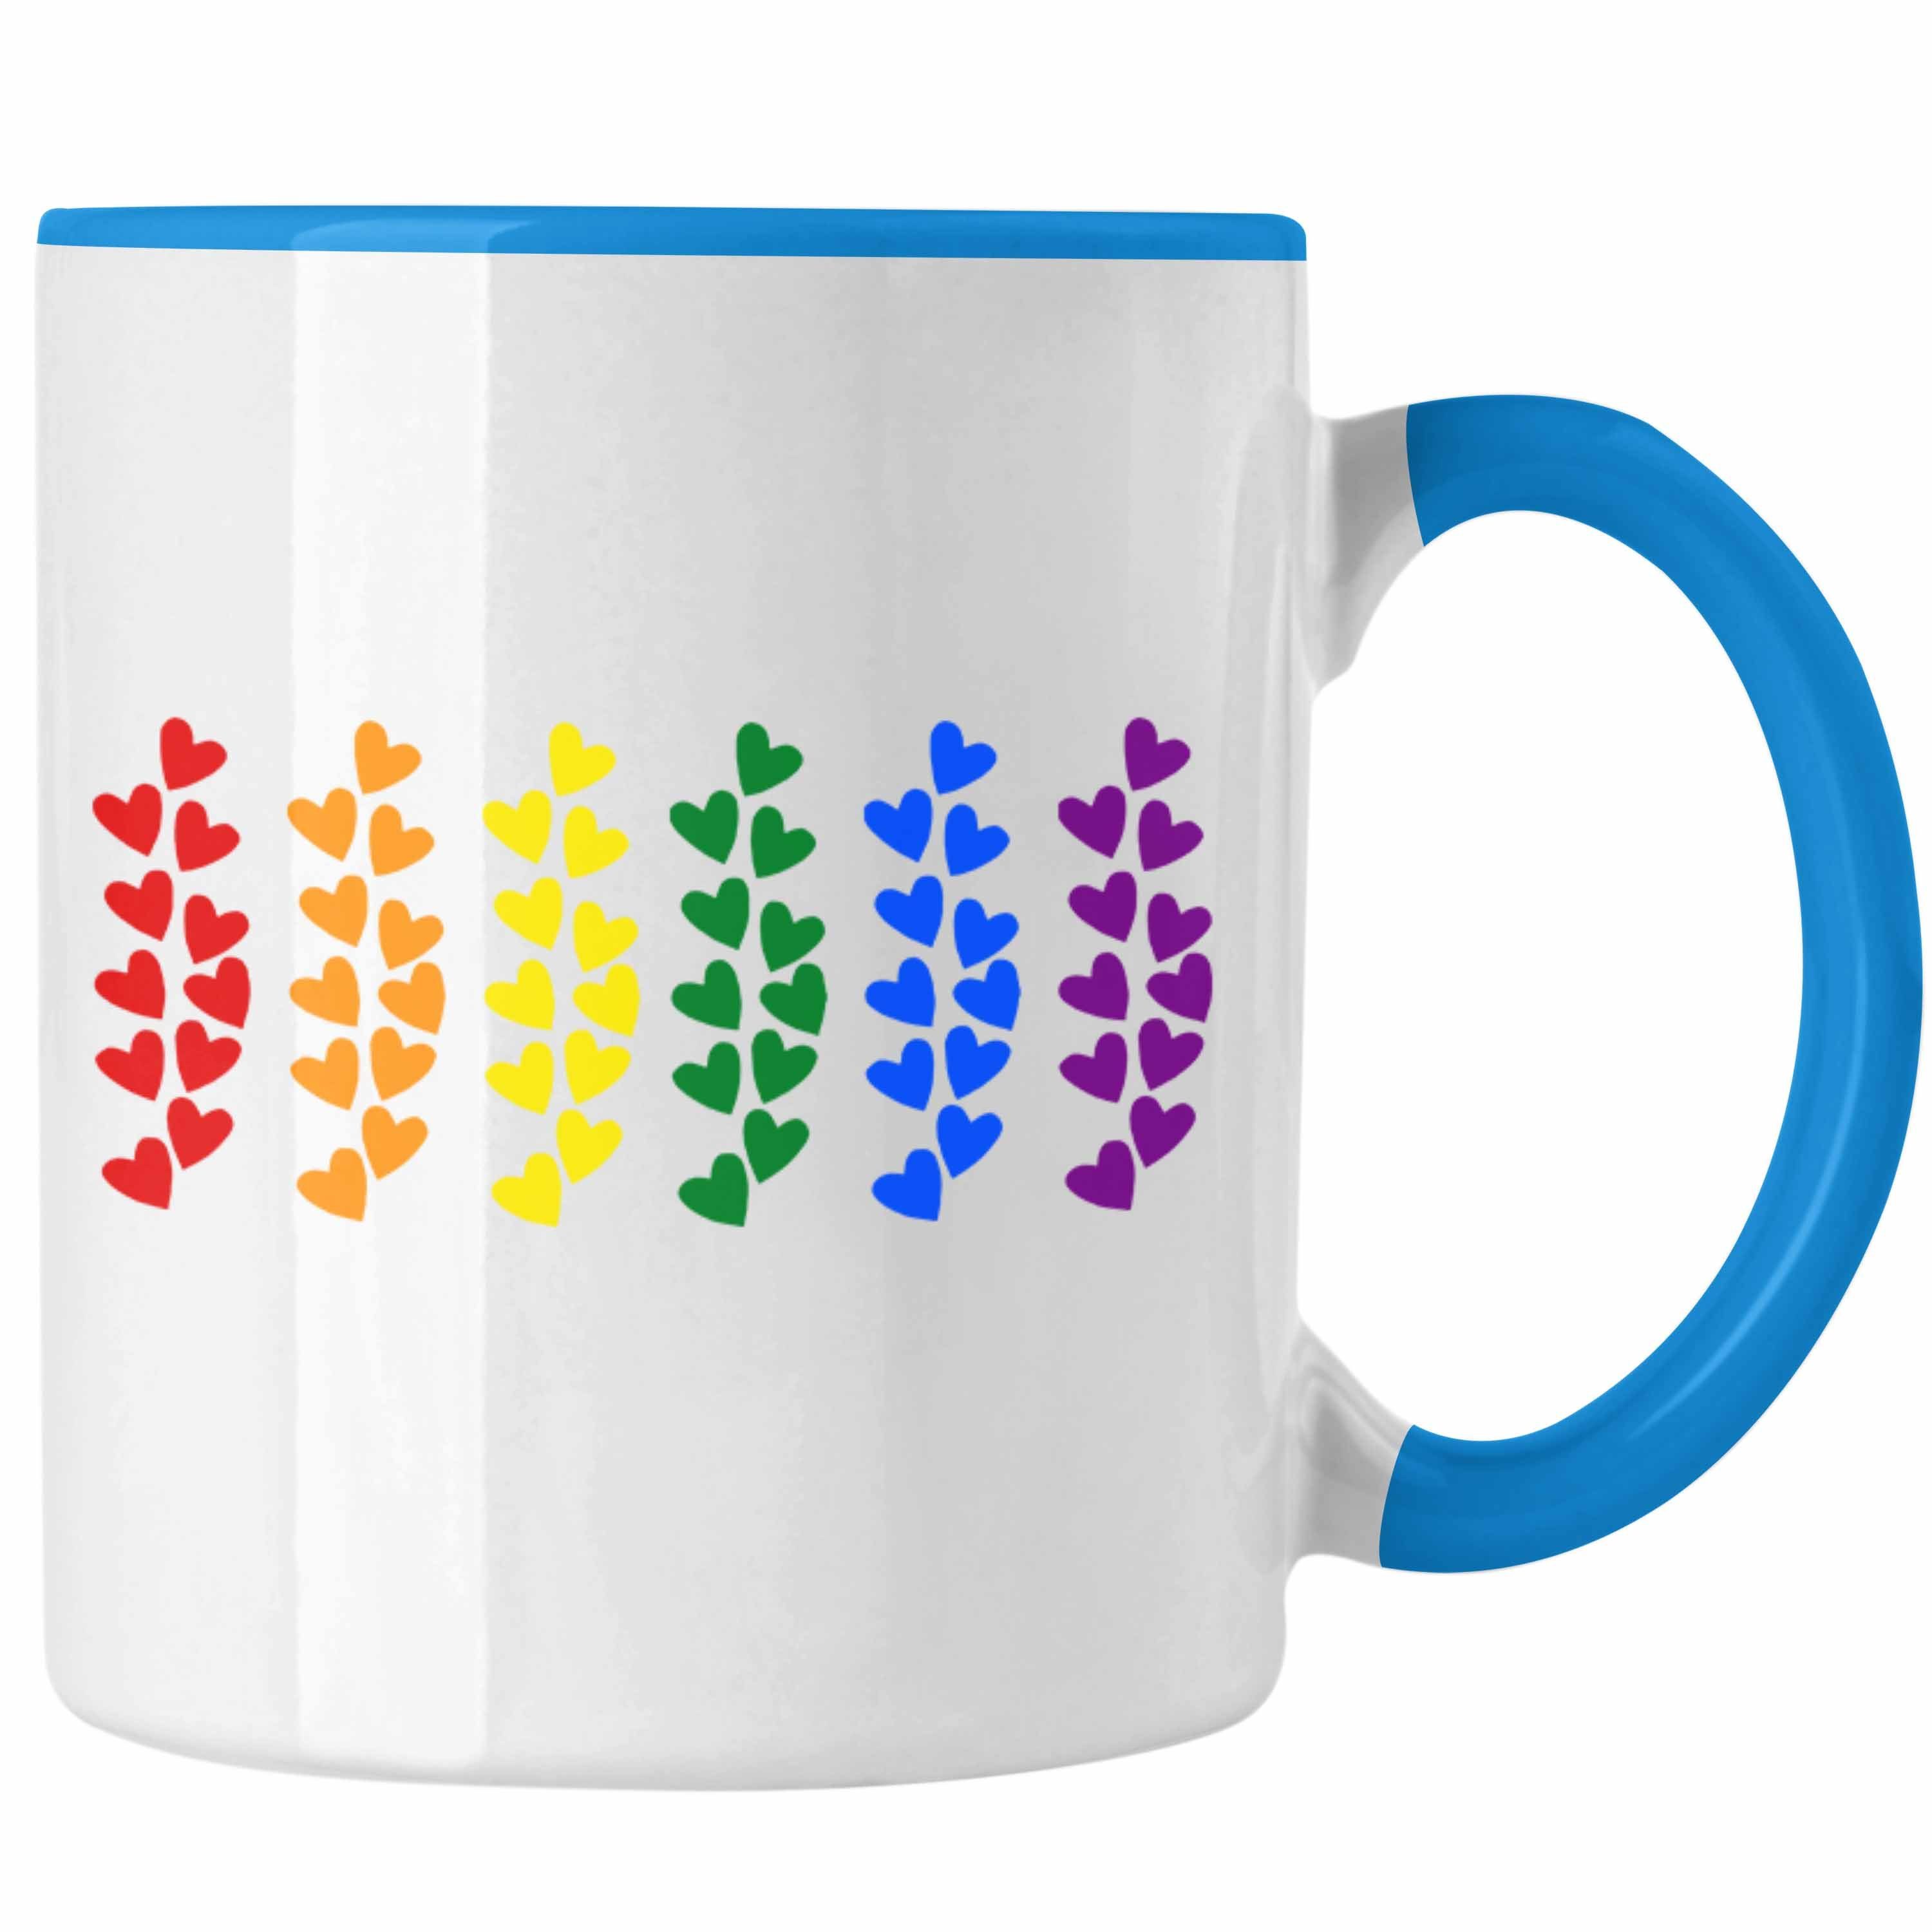 Trendation Tasse Trendation - Regenbogen Tasse Geschenk LGBT Schwule Lesben Transgender Grafik Pride Herzen Flagge Blau